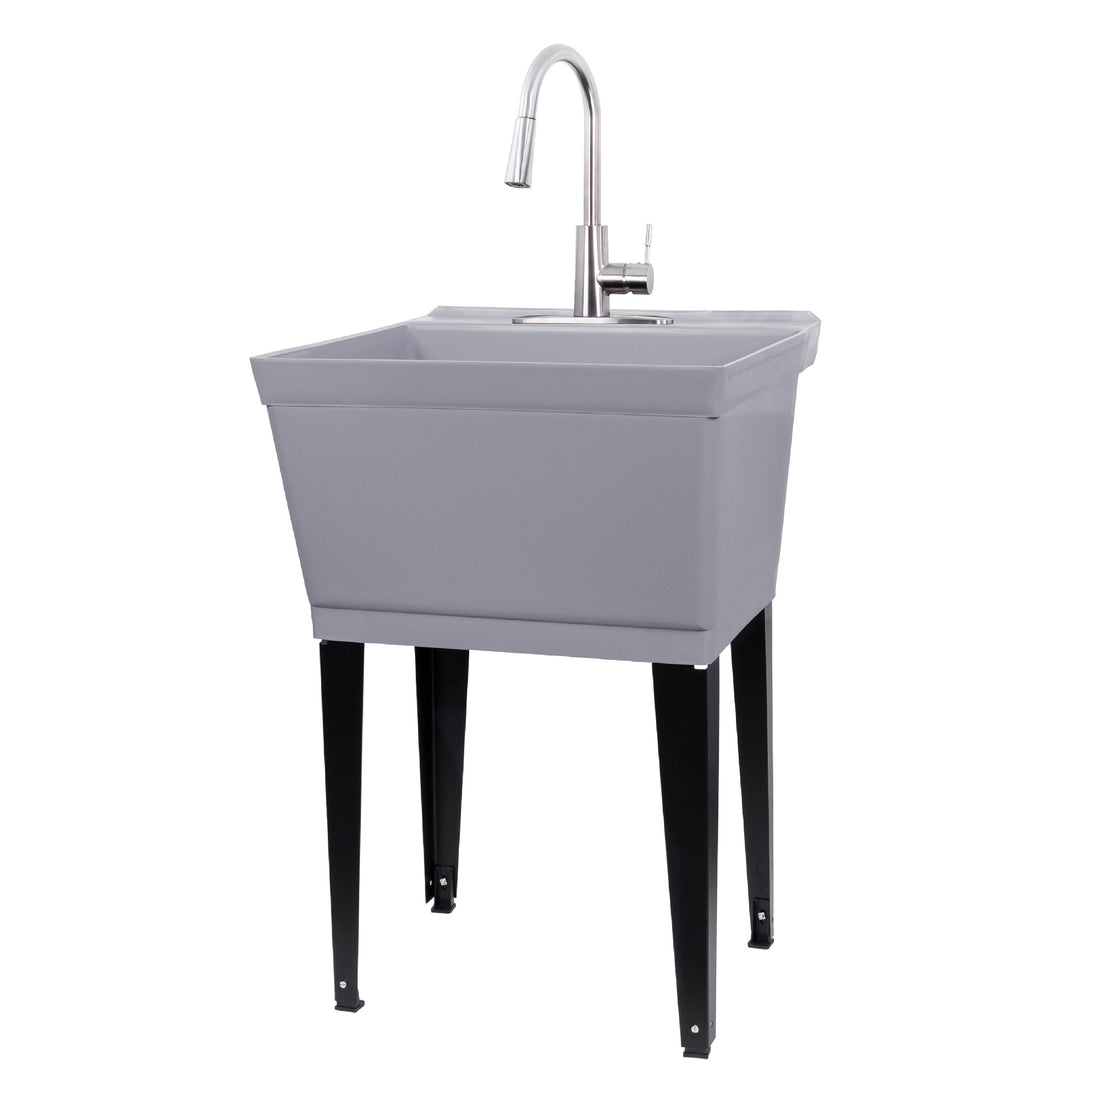 Tehila Standard Freestanding Grey Utility Sink with Stainless Steel Finish High-ArcPull-Down Faucet - Utility sinks vanites Tehila